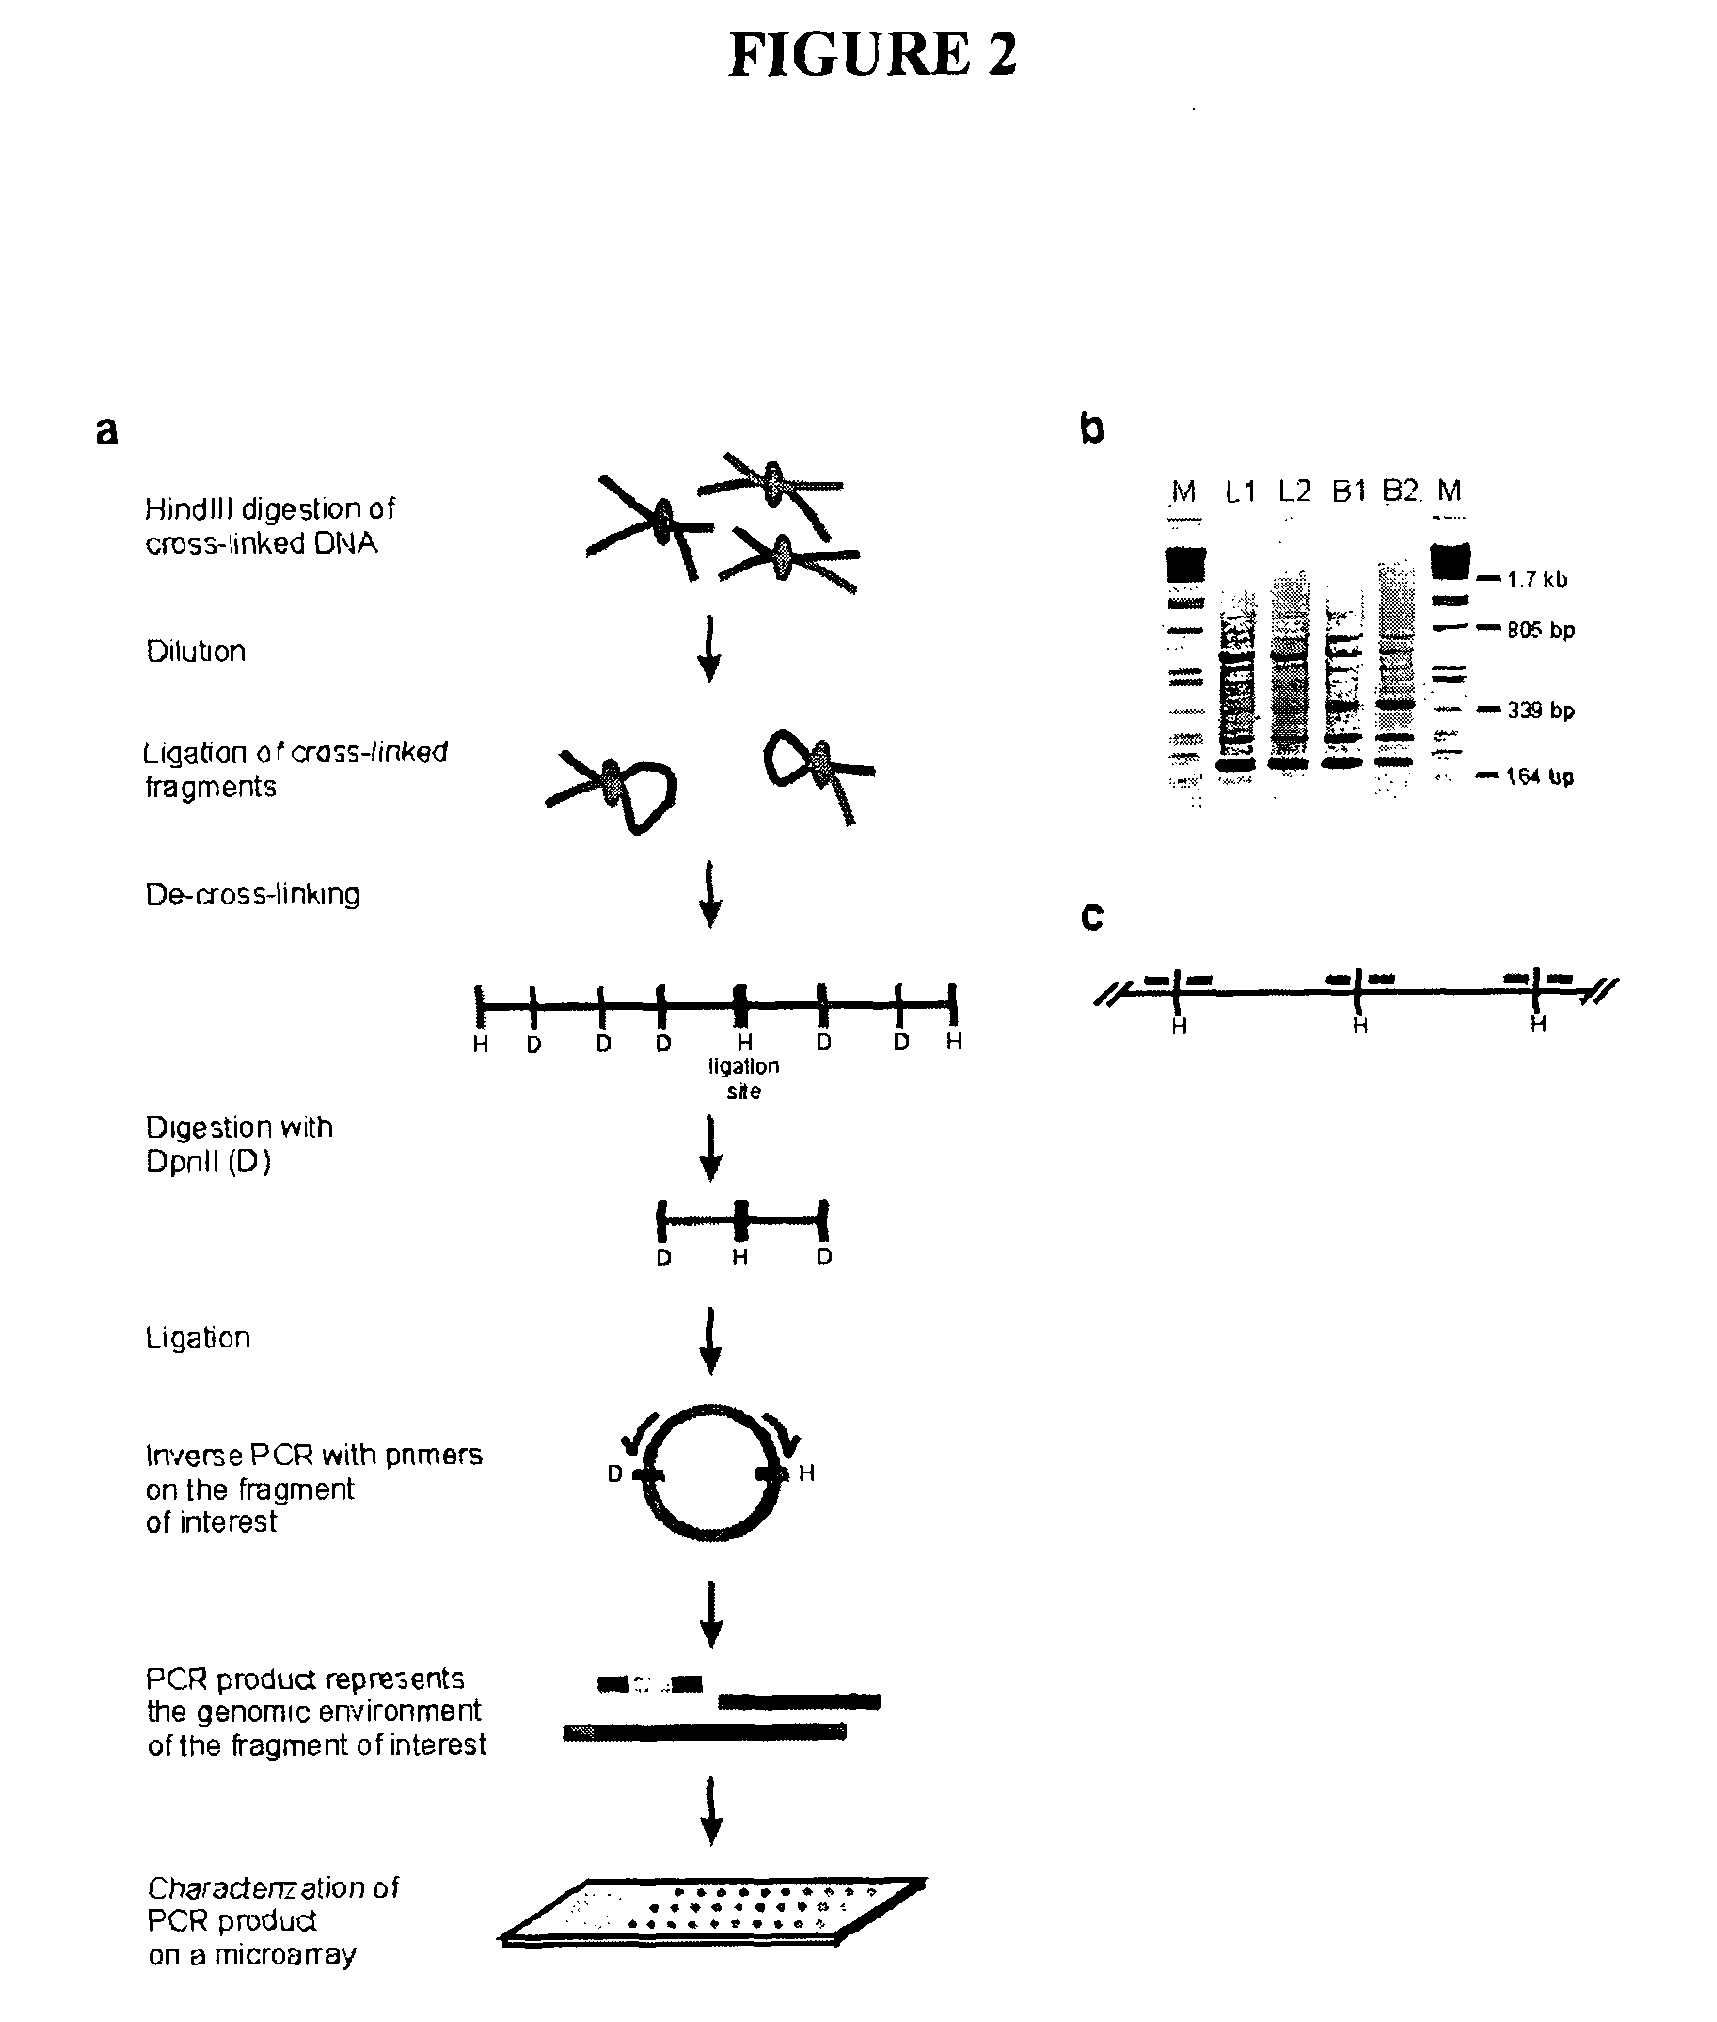 Circular chromosome conformation capture (4C)